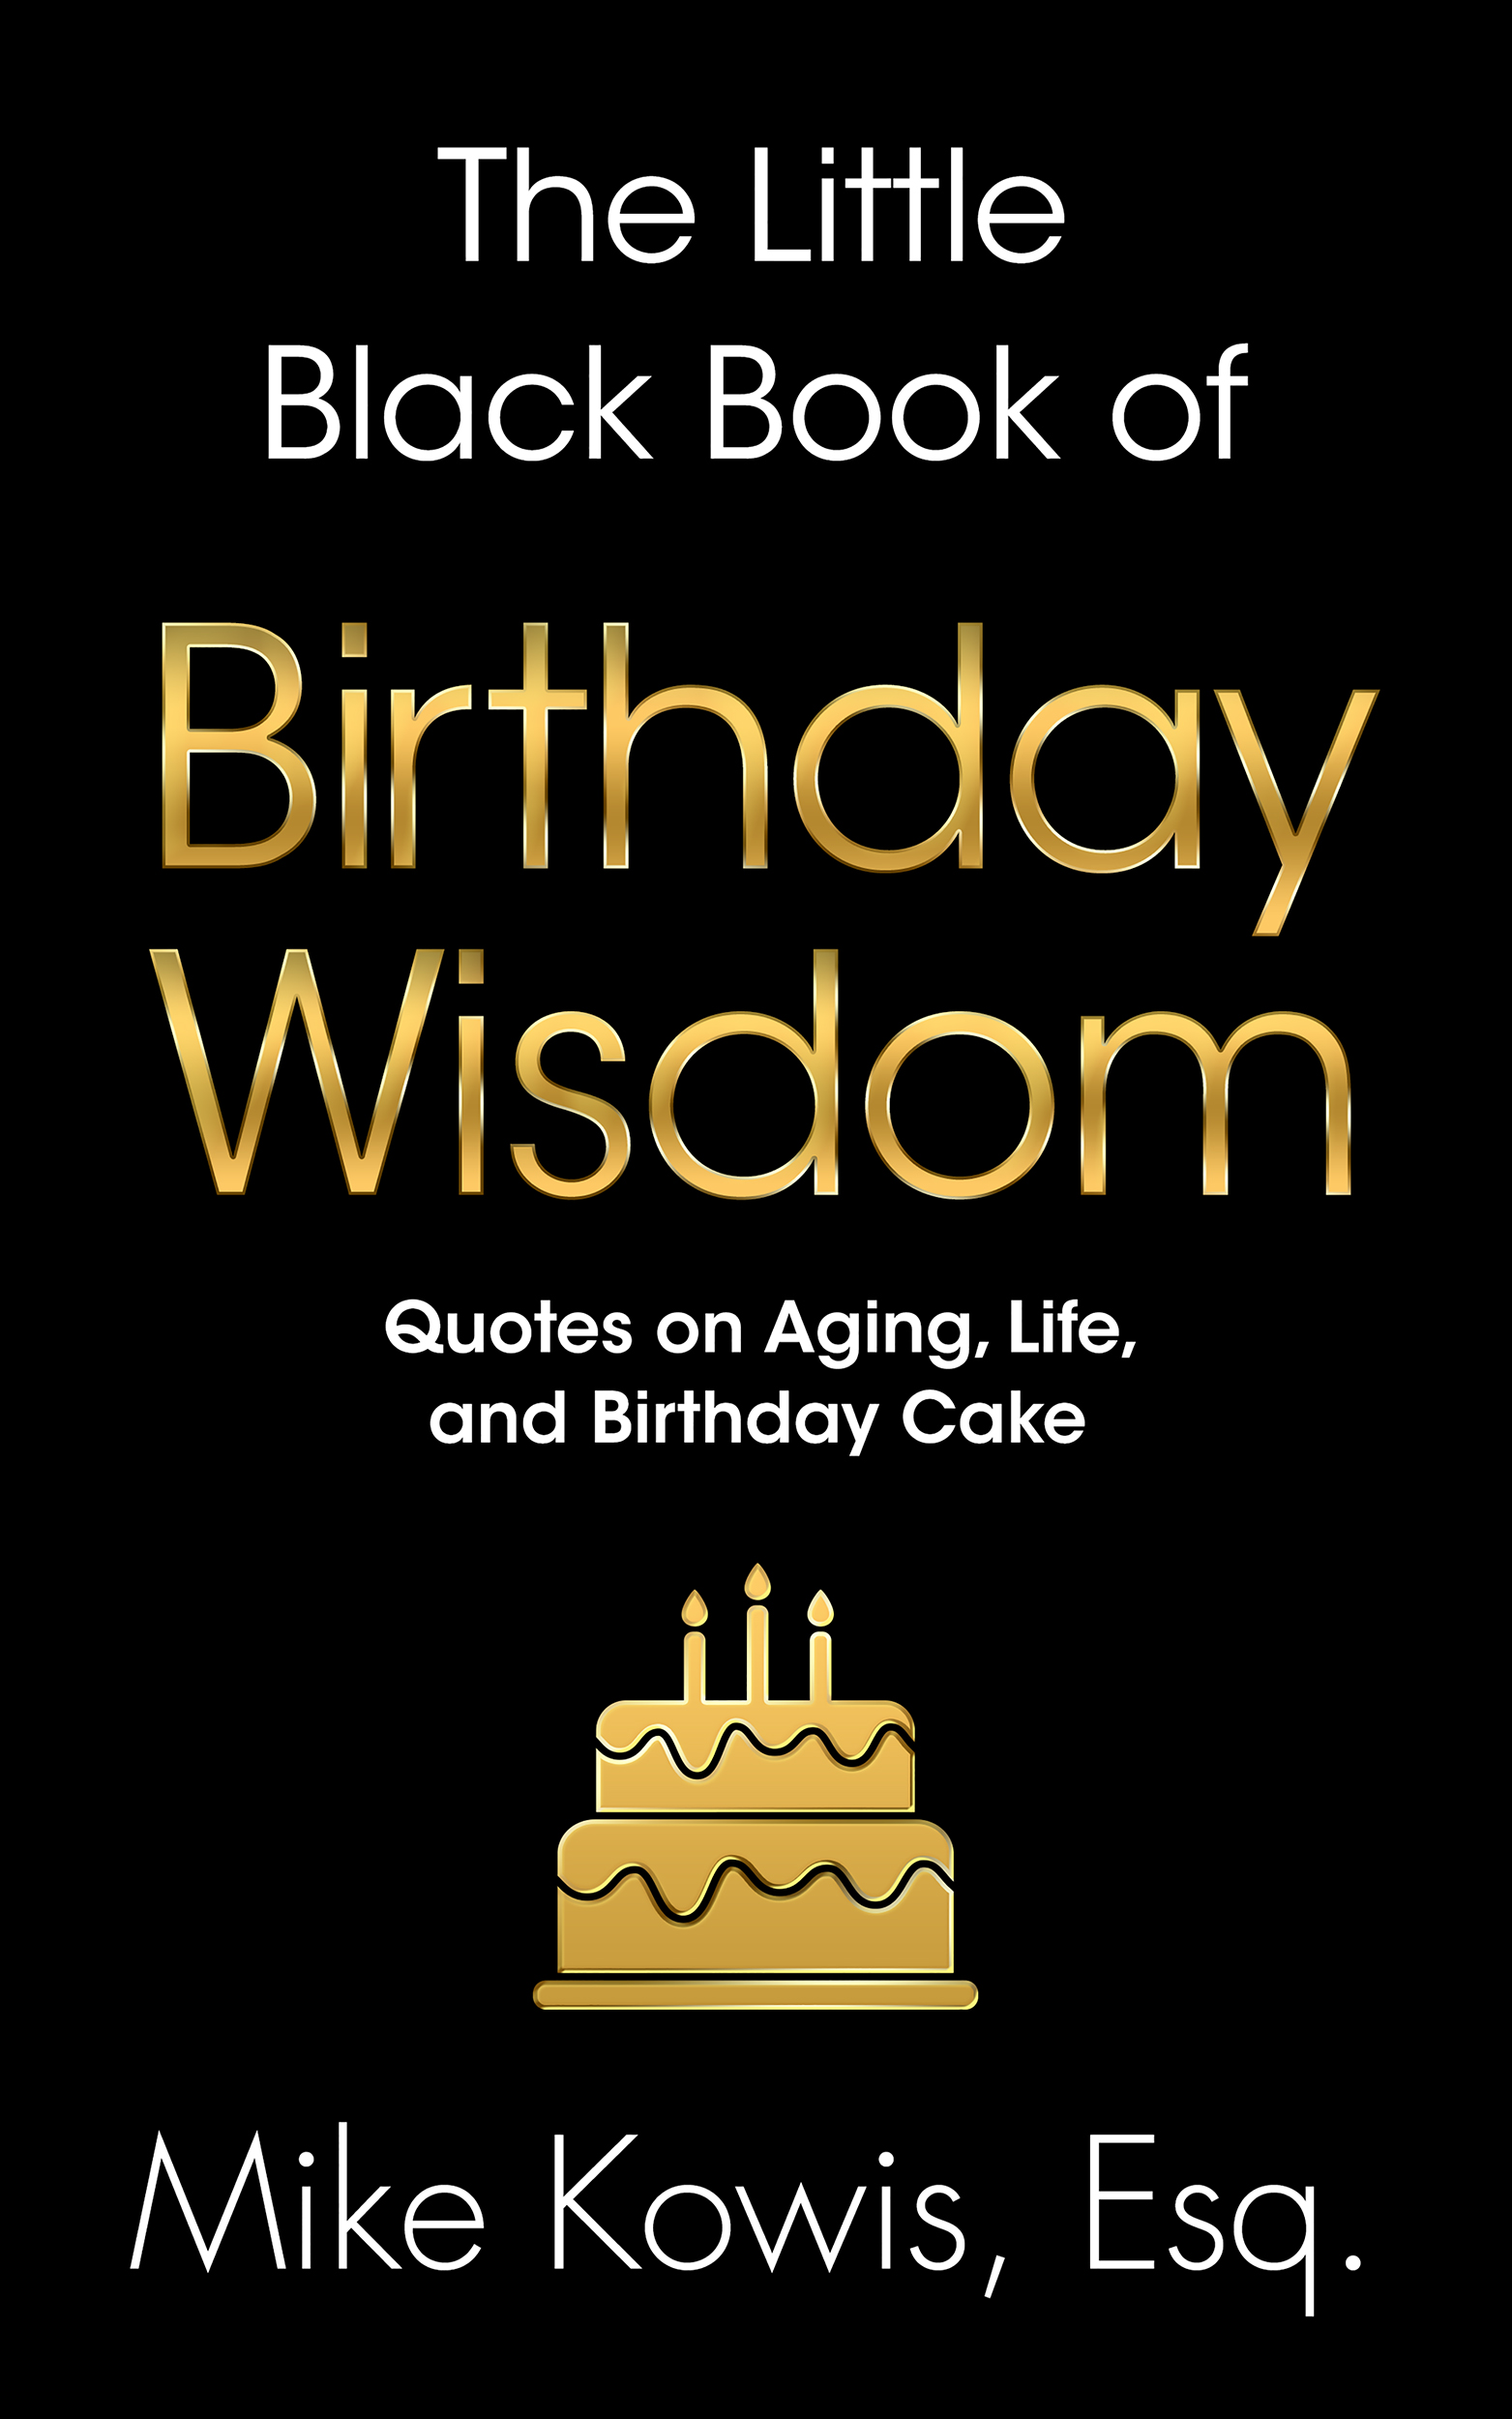 The Little Black Book of Birthday Wisdom